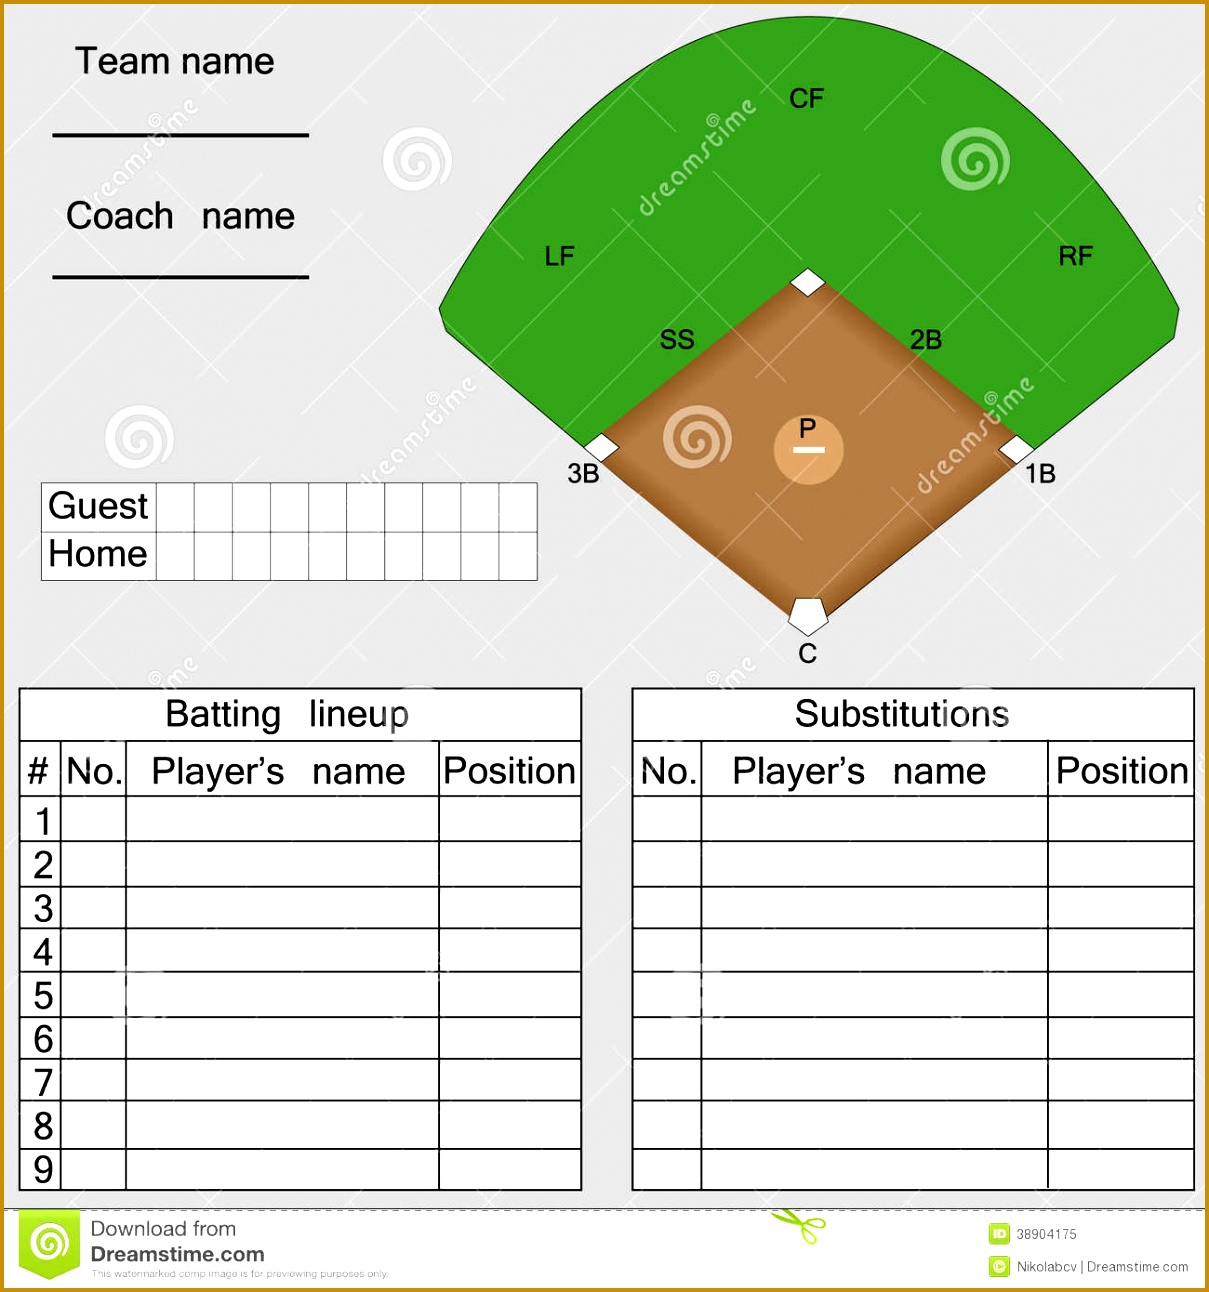 Free Baseball Lineup Card Template 12921209